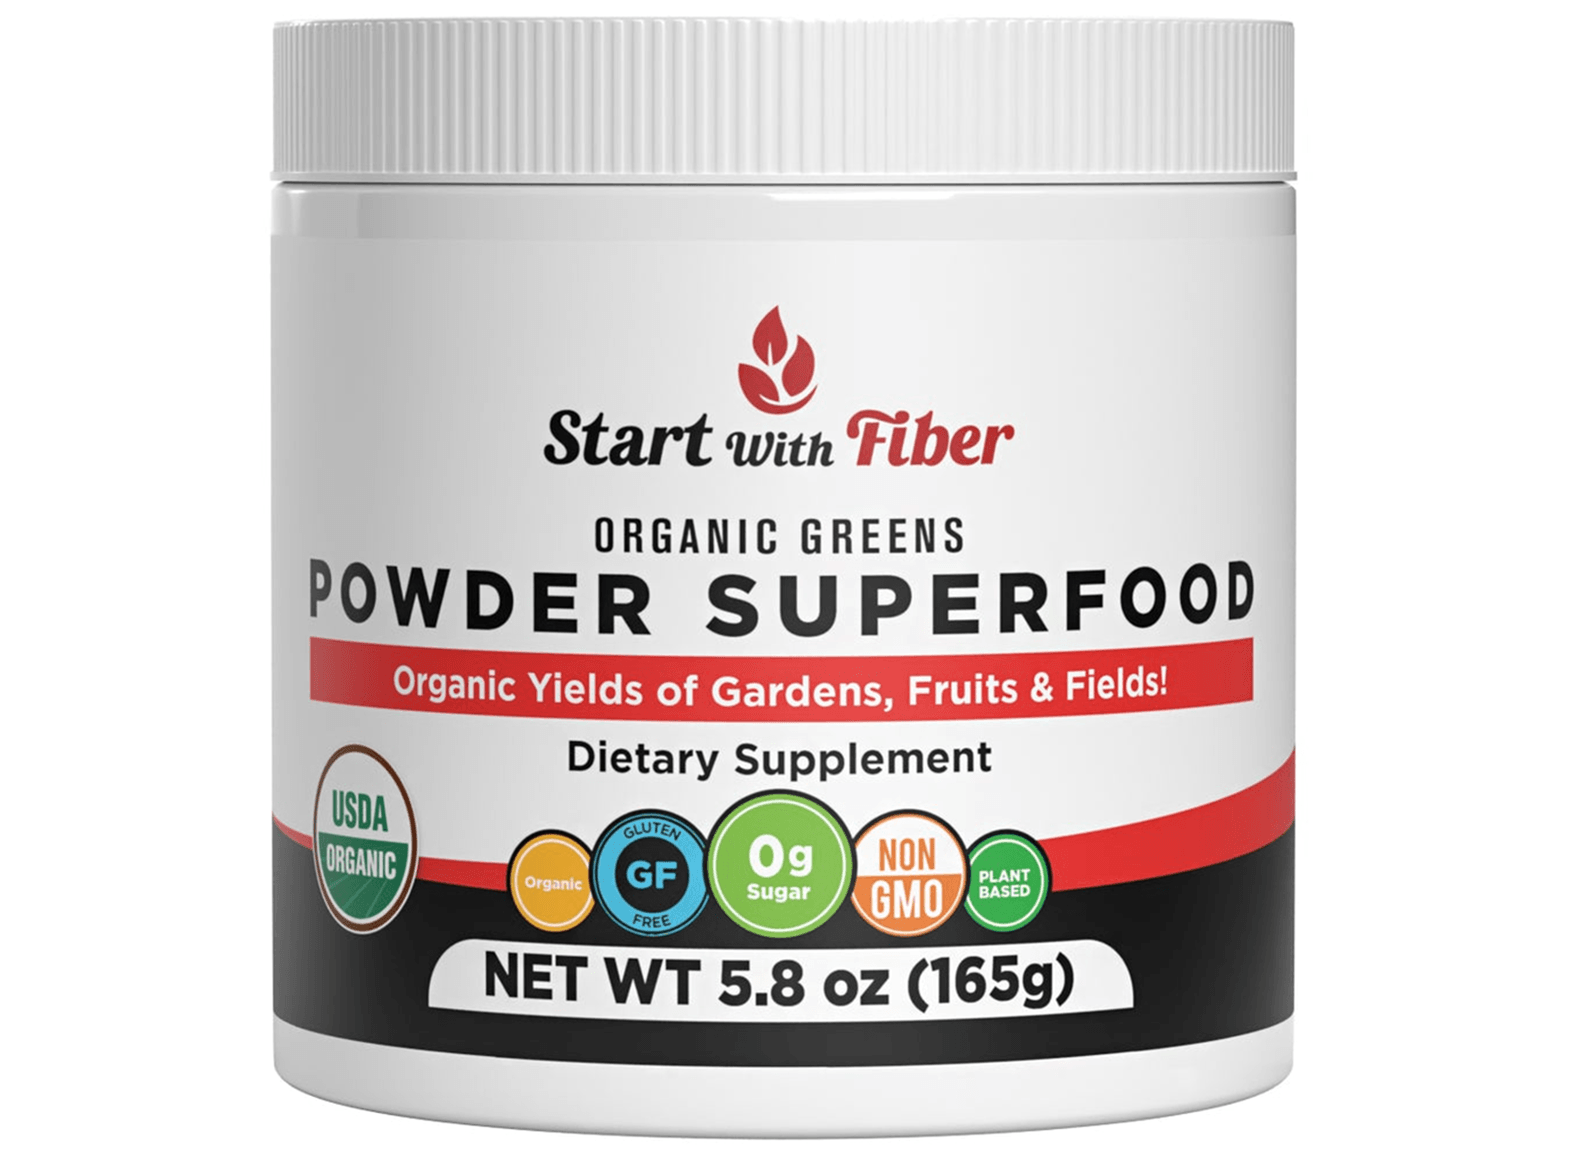 Organic Greens Powder  Superfood